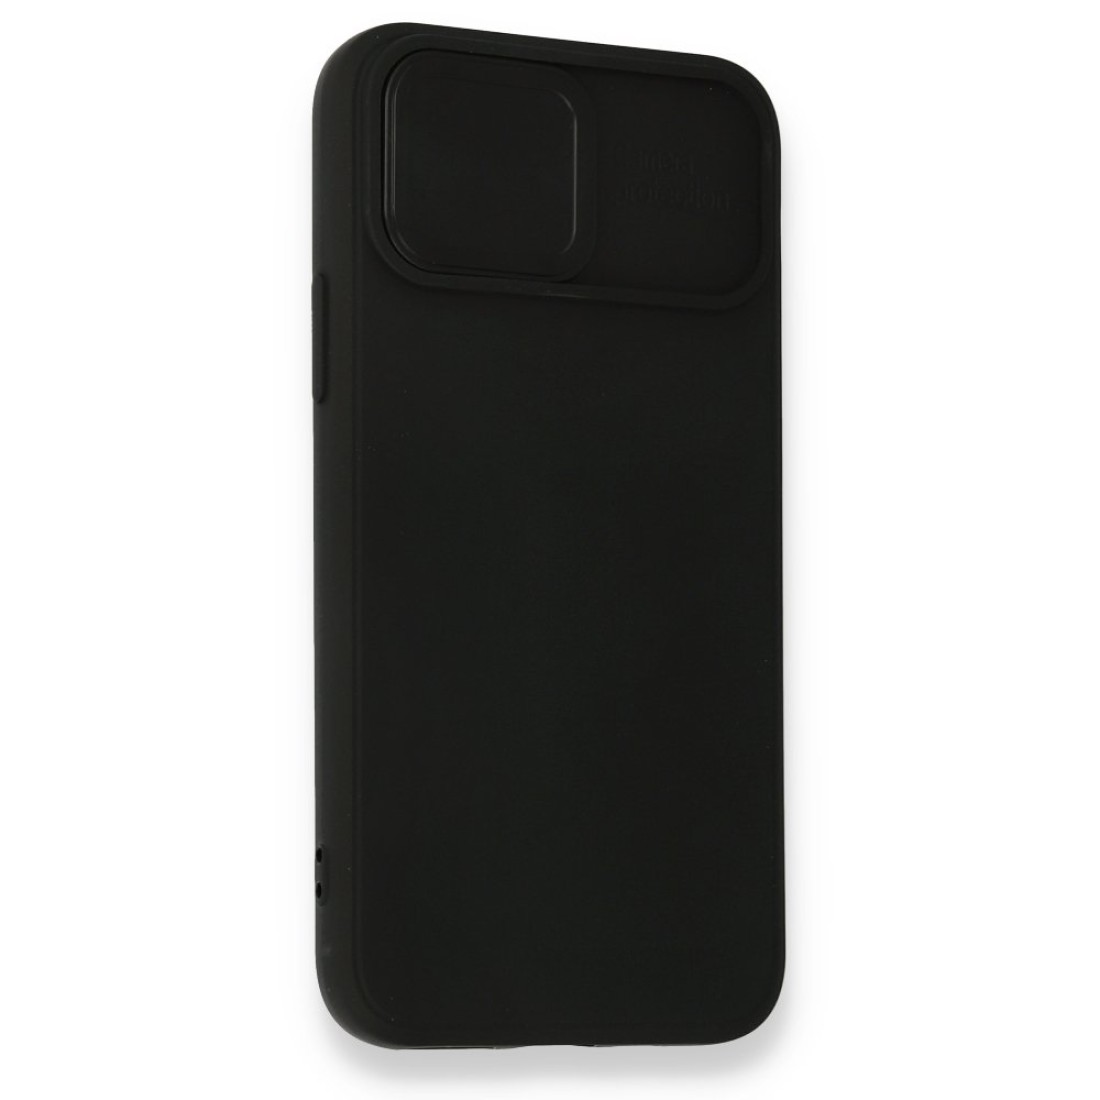 Apple iPhone 11 Pro Max Kılıf Color Lens Silikon - Siyah